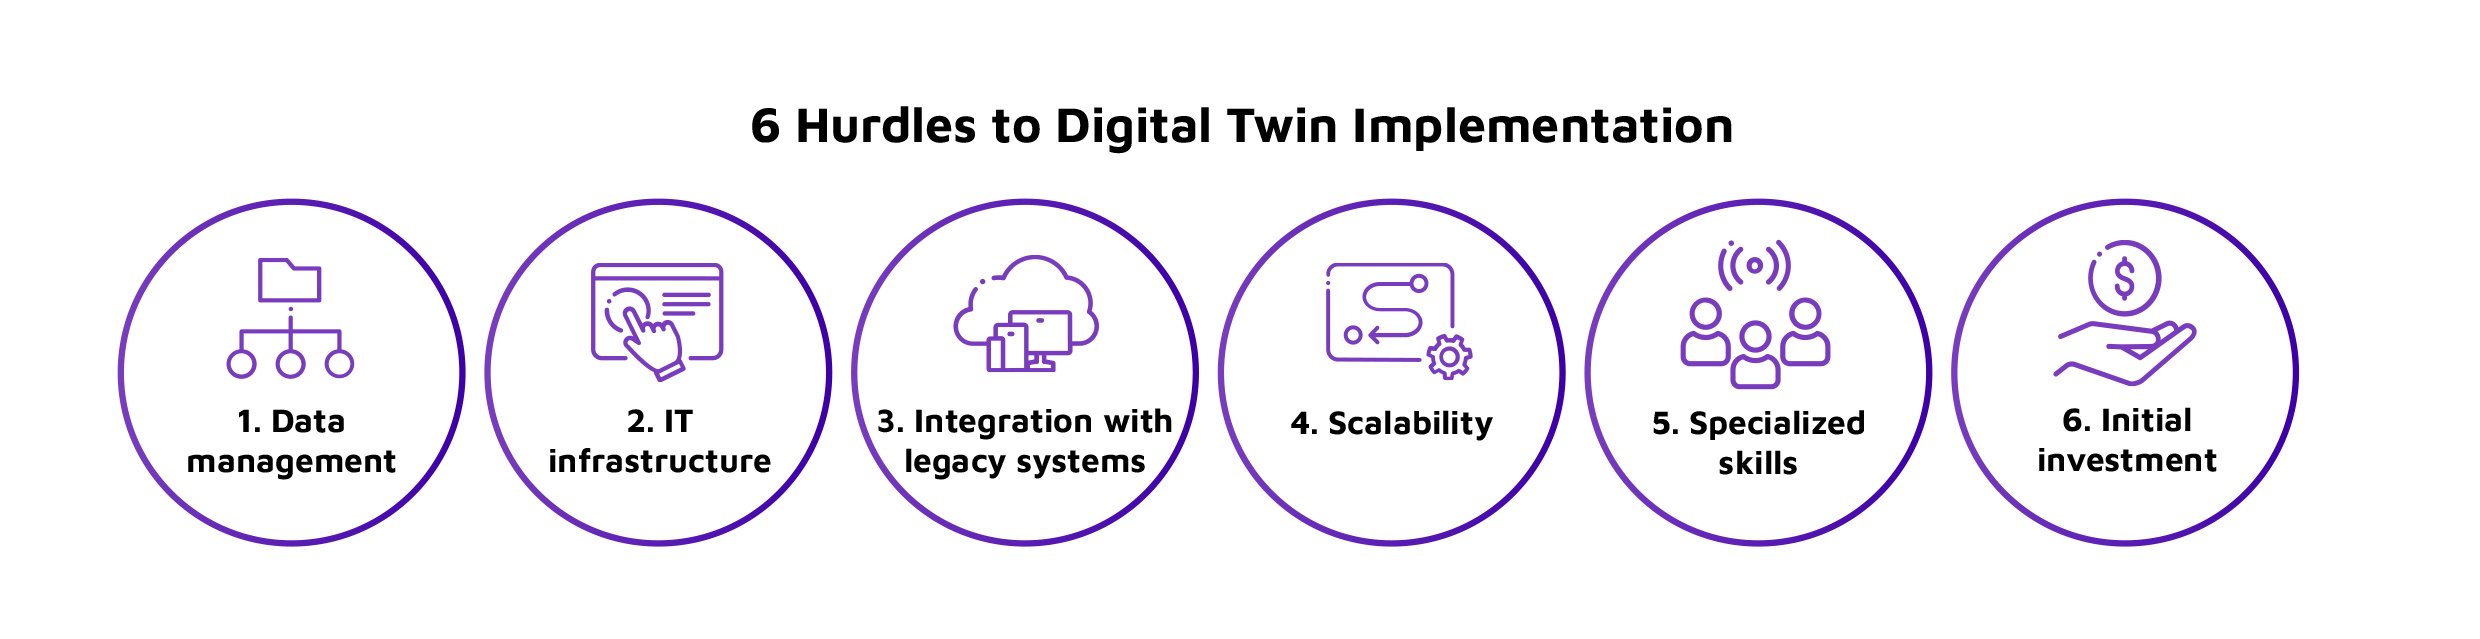 6 hurdles to digital twin implementation